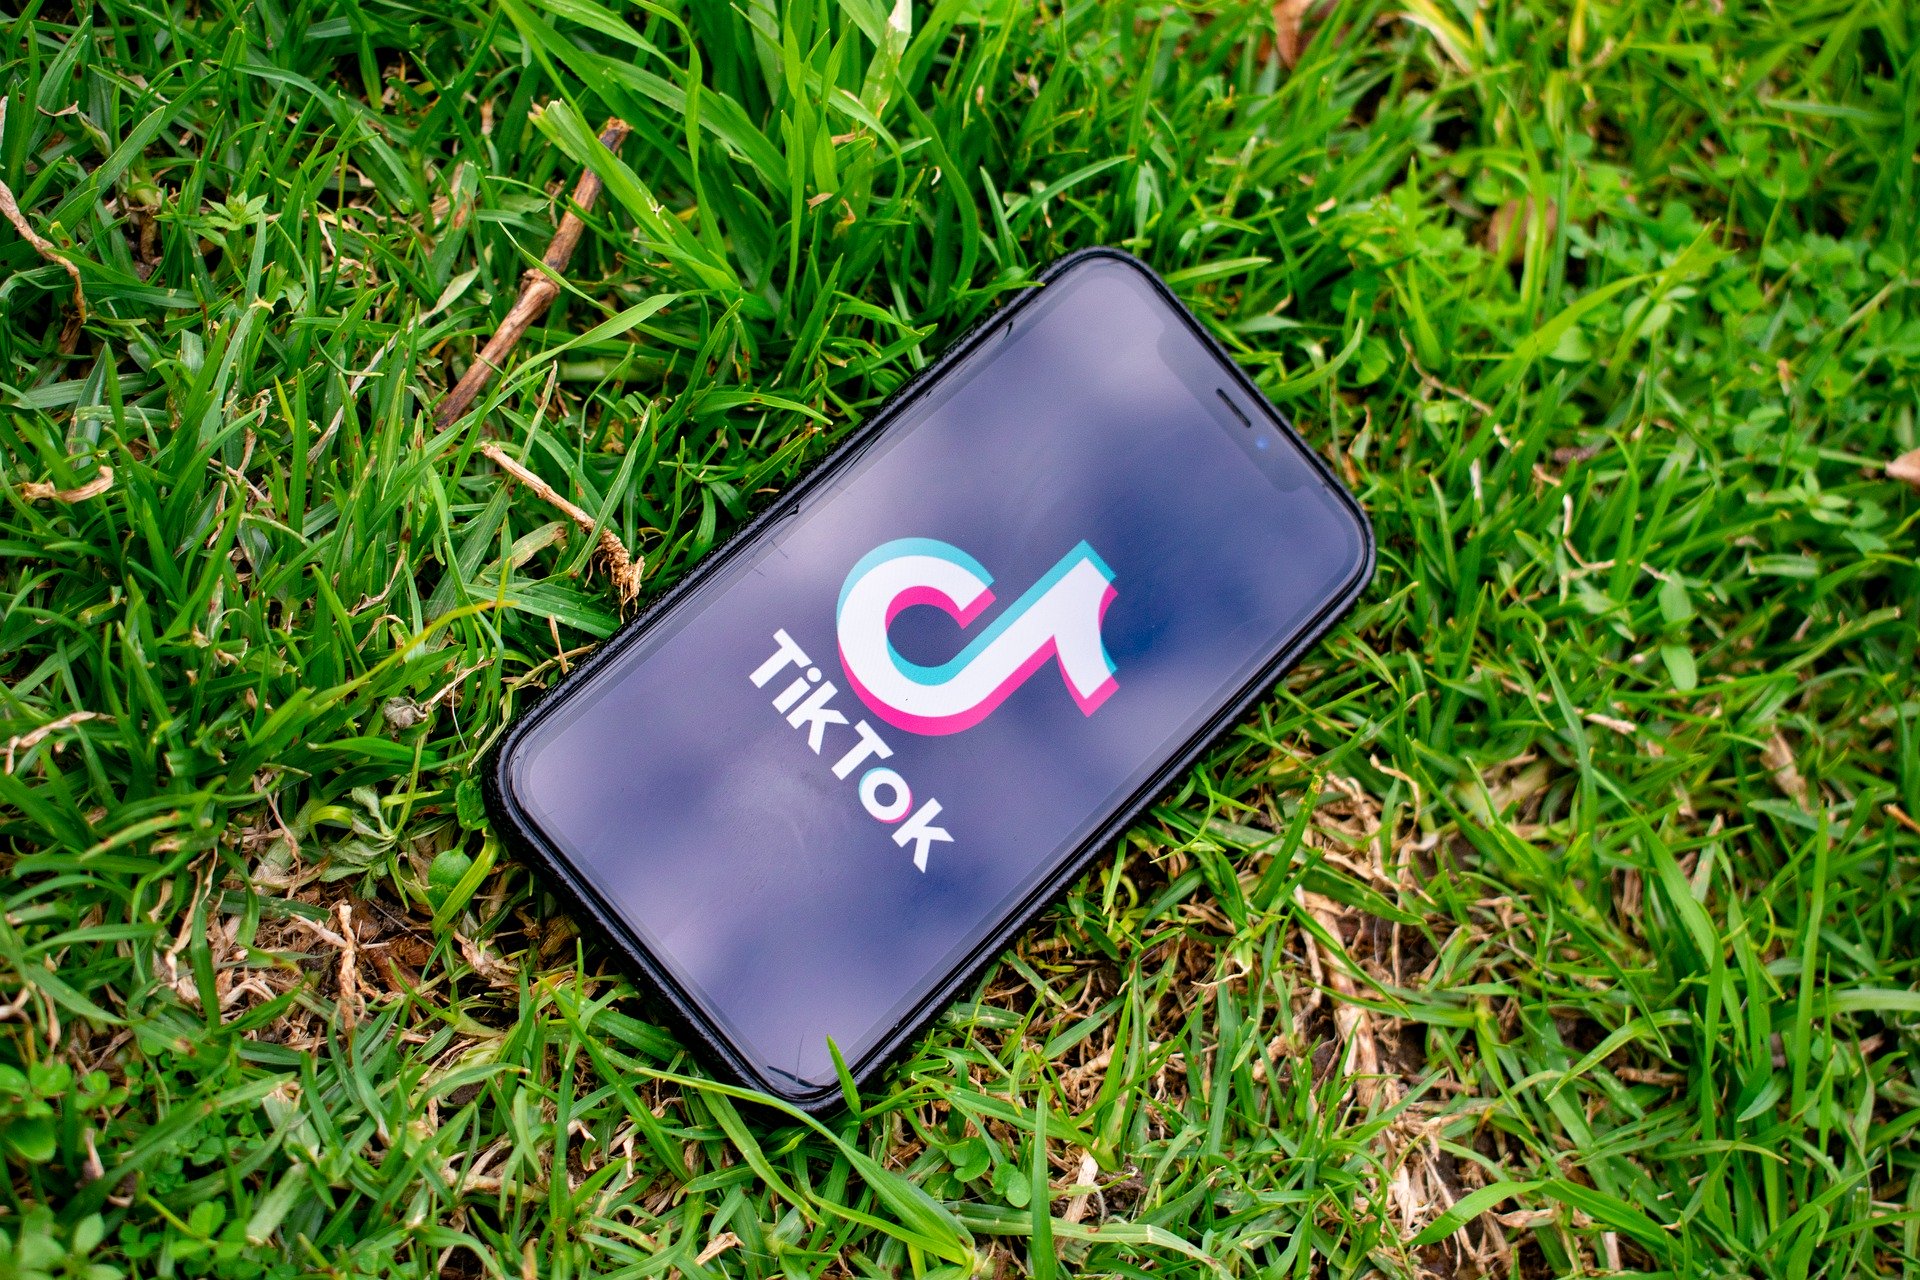 Reports: Amazon bans video app TikTok on workers' phones